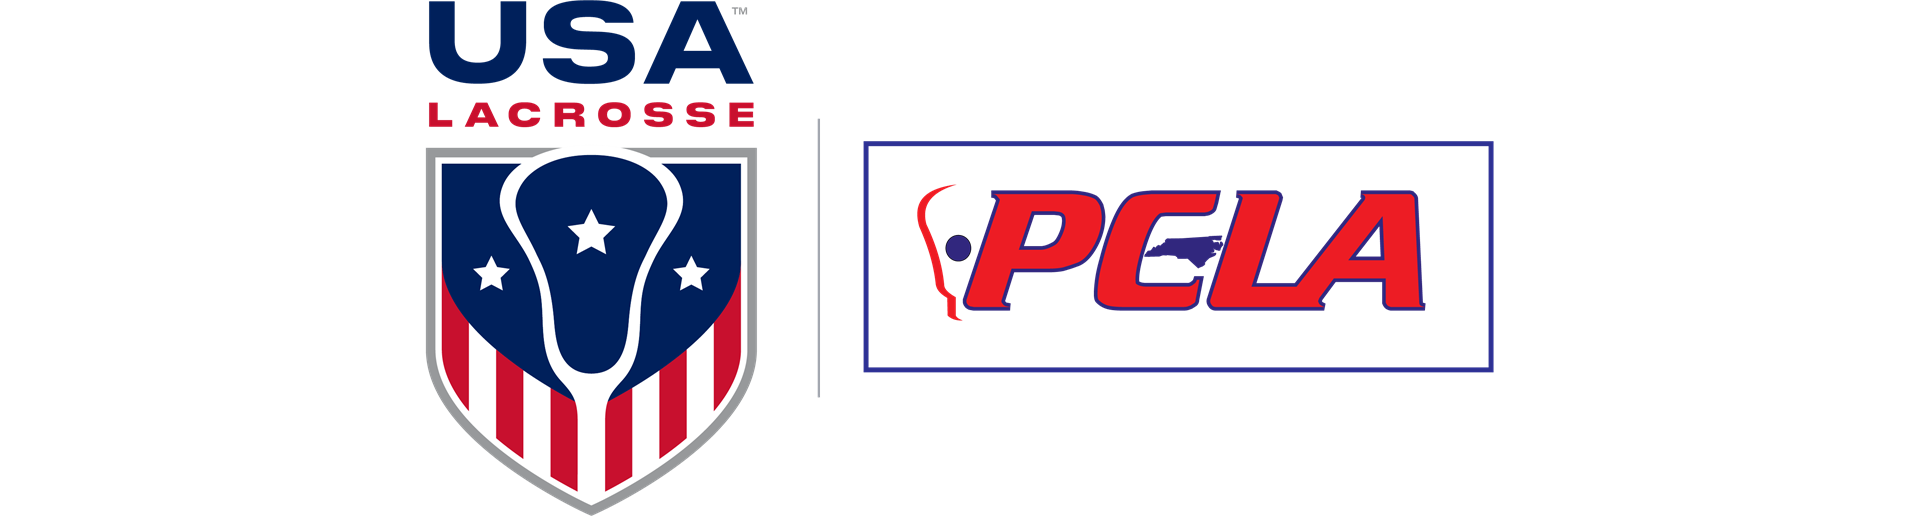 USA Lacrosse - PCLA